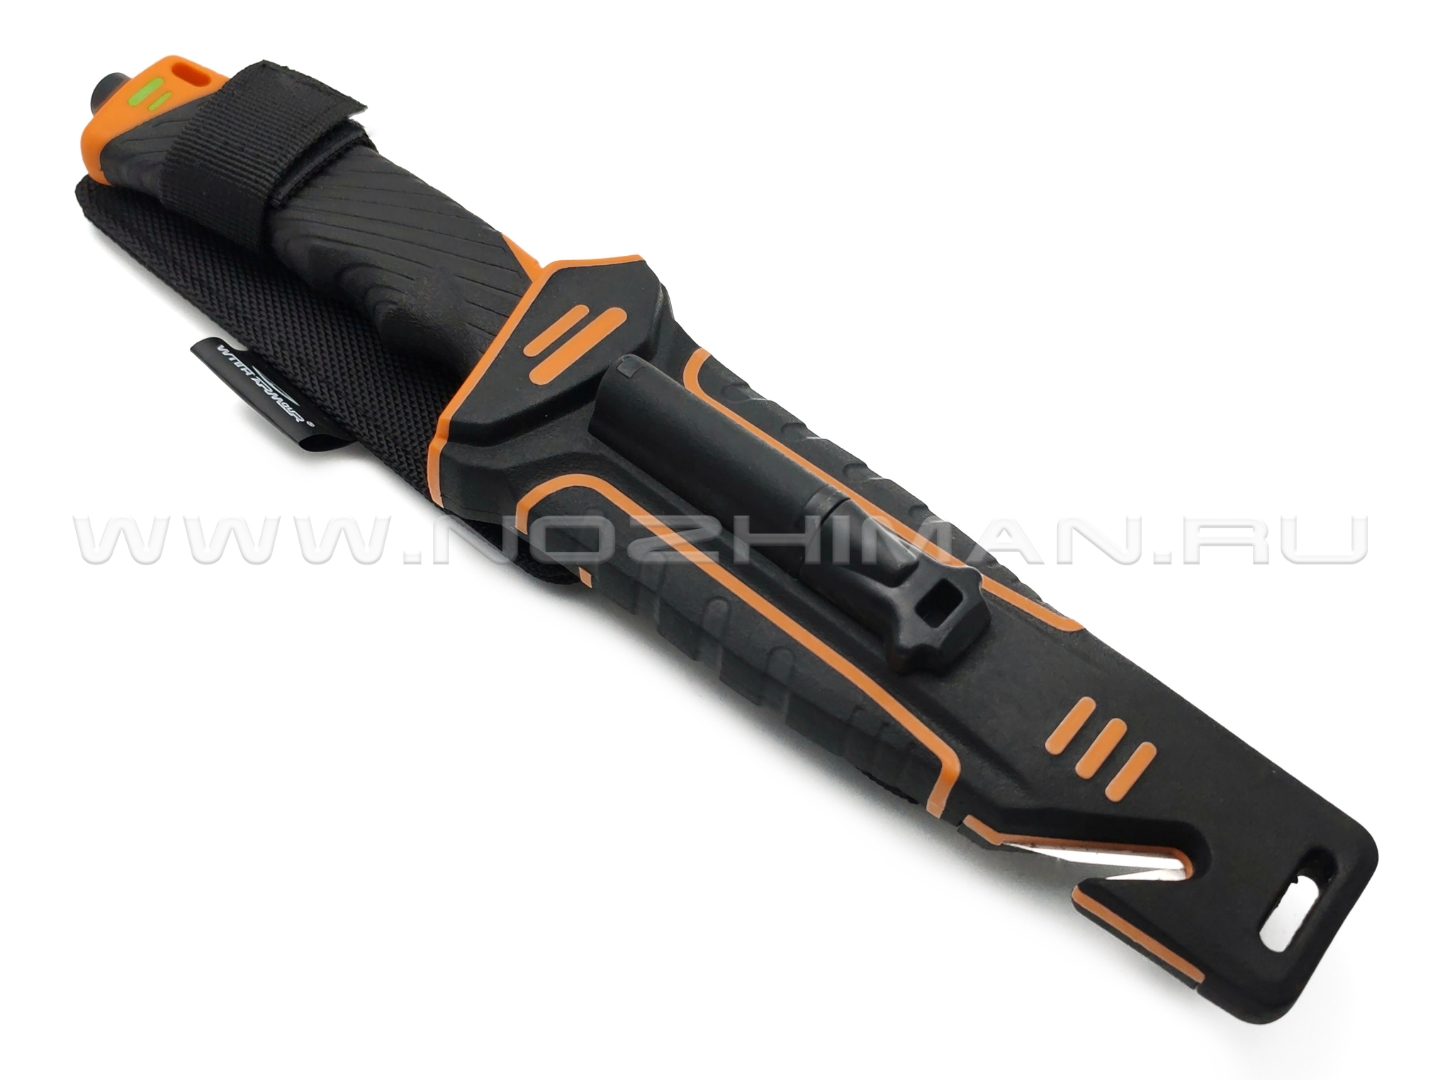 WithArmour нож выживания Nightingale WA-001OR сталь 440C grey, рукоять Rubber black, ABS orange